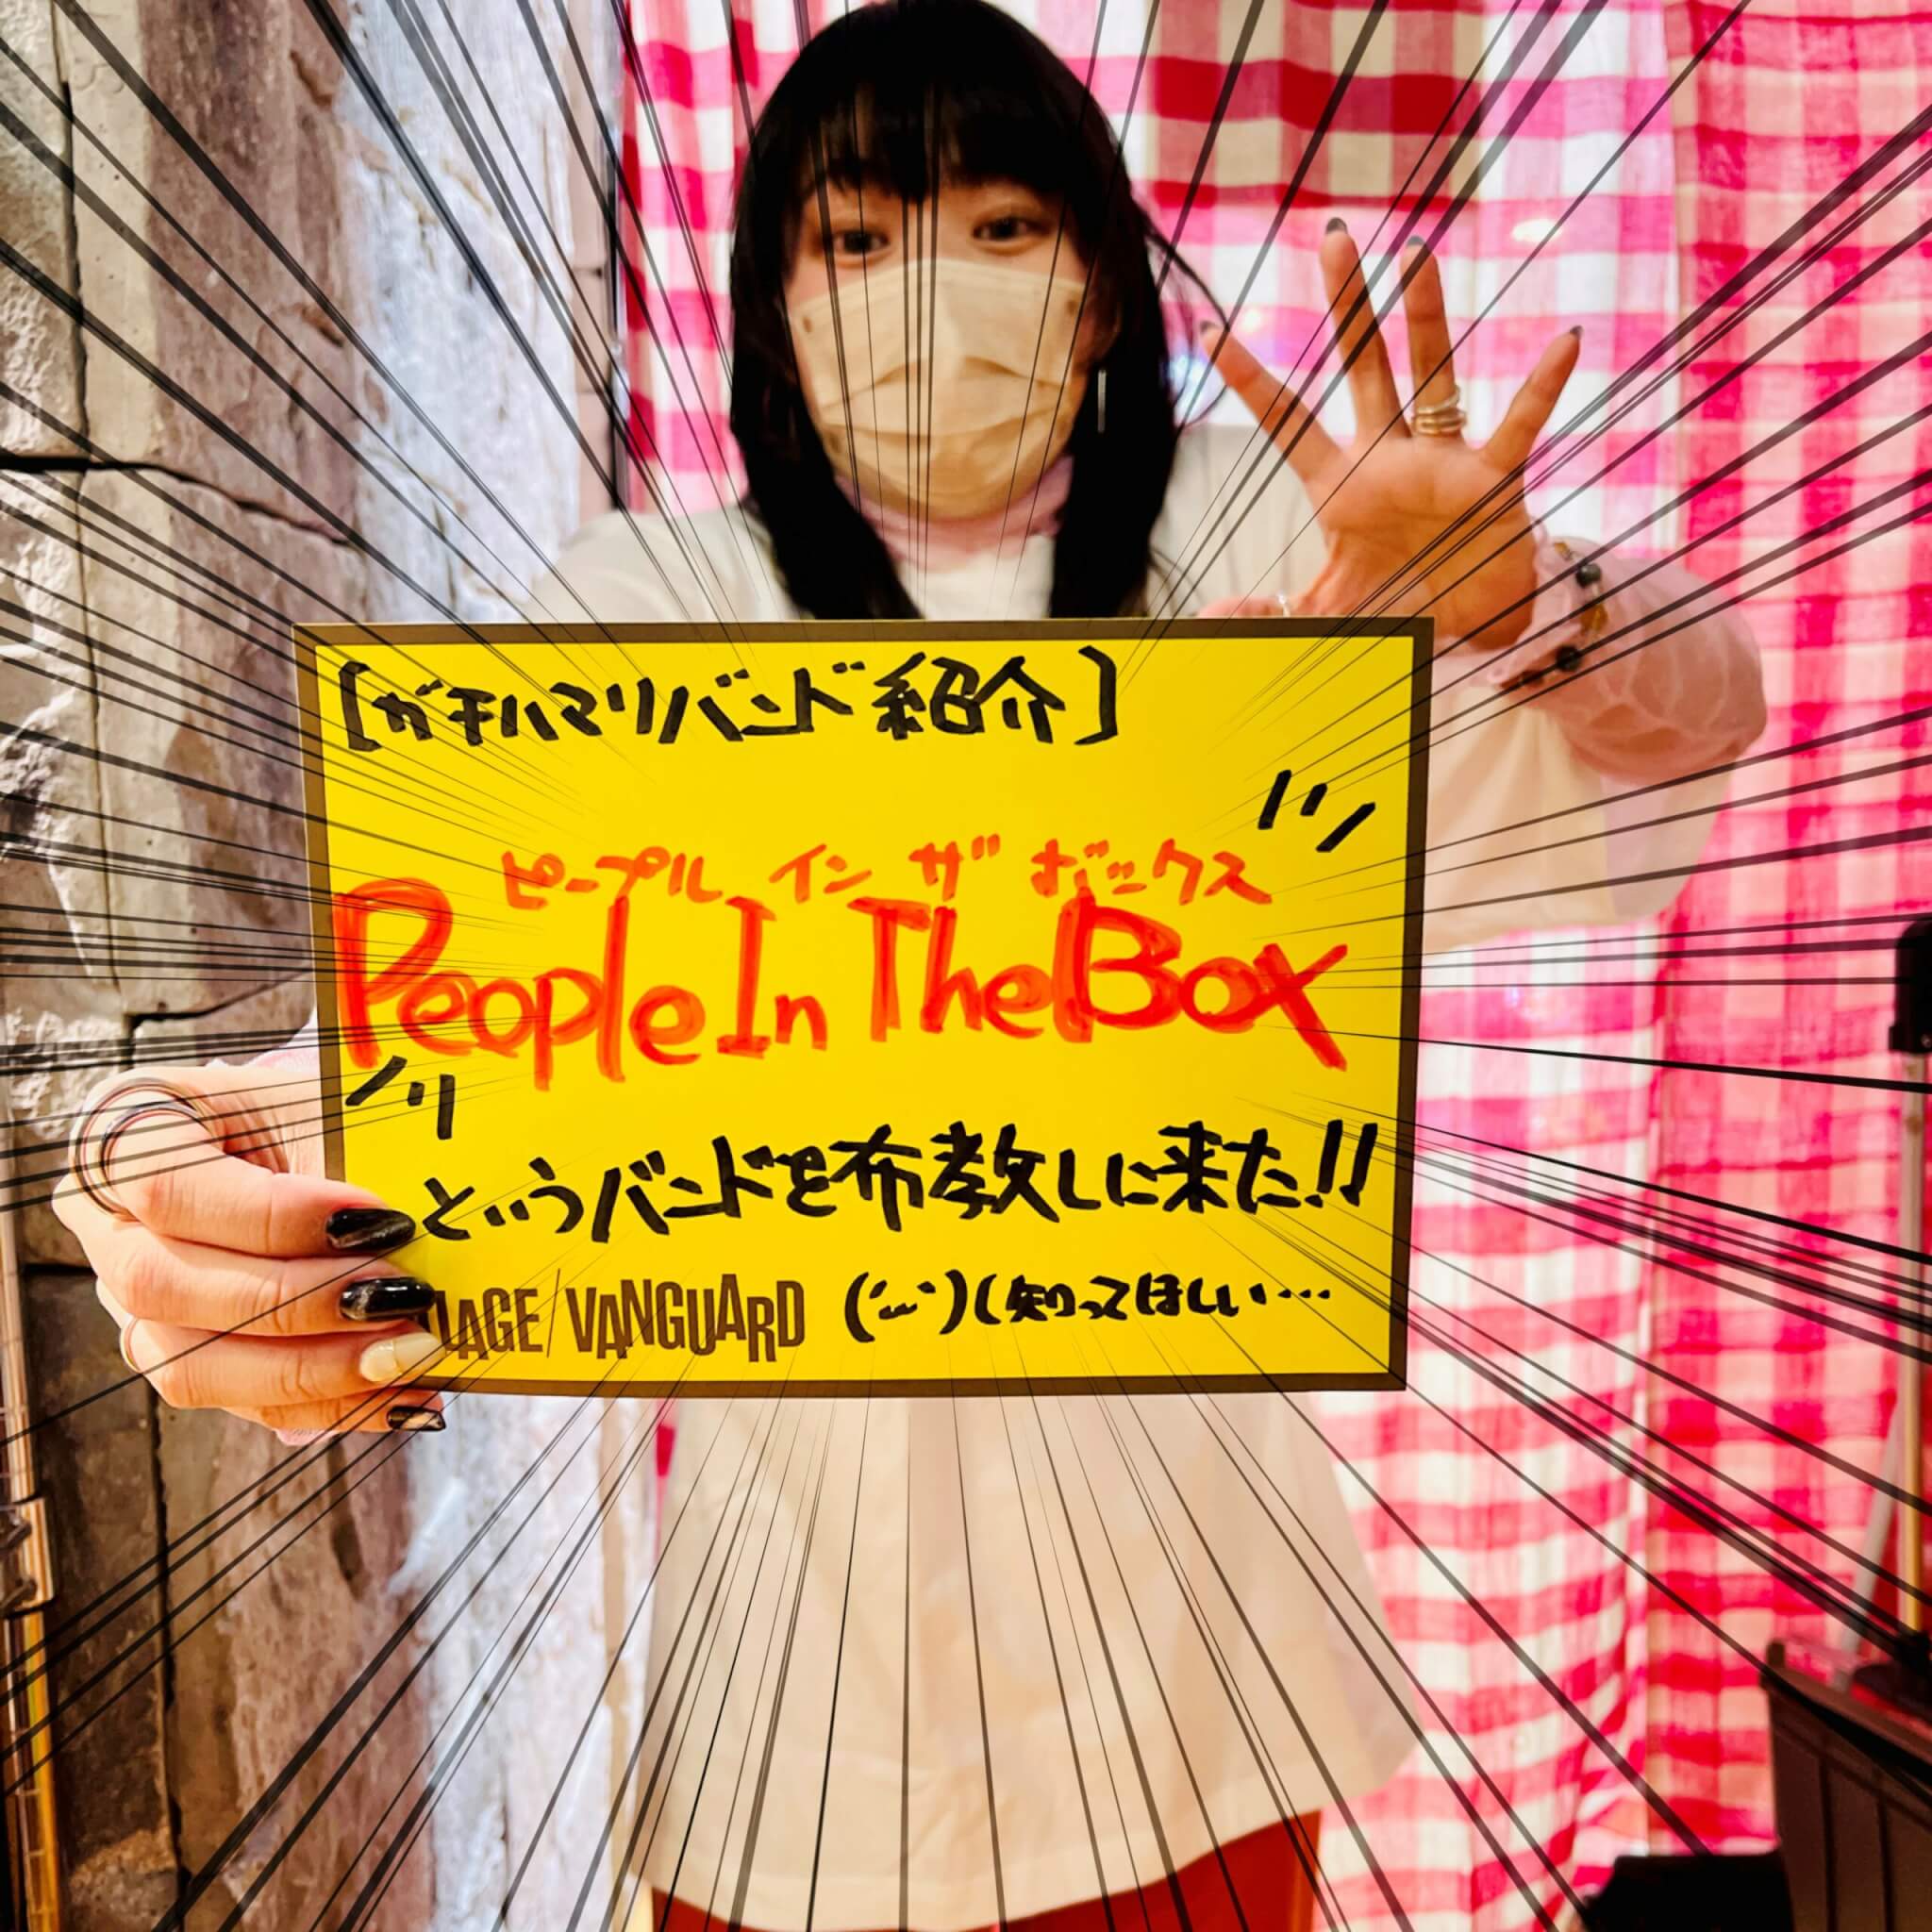 People In The Box【ガチハマりバンド紹介】 | ラヴヴァン